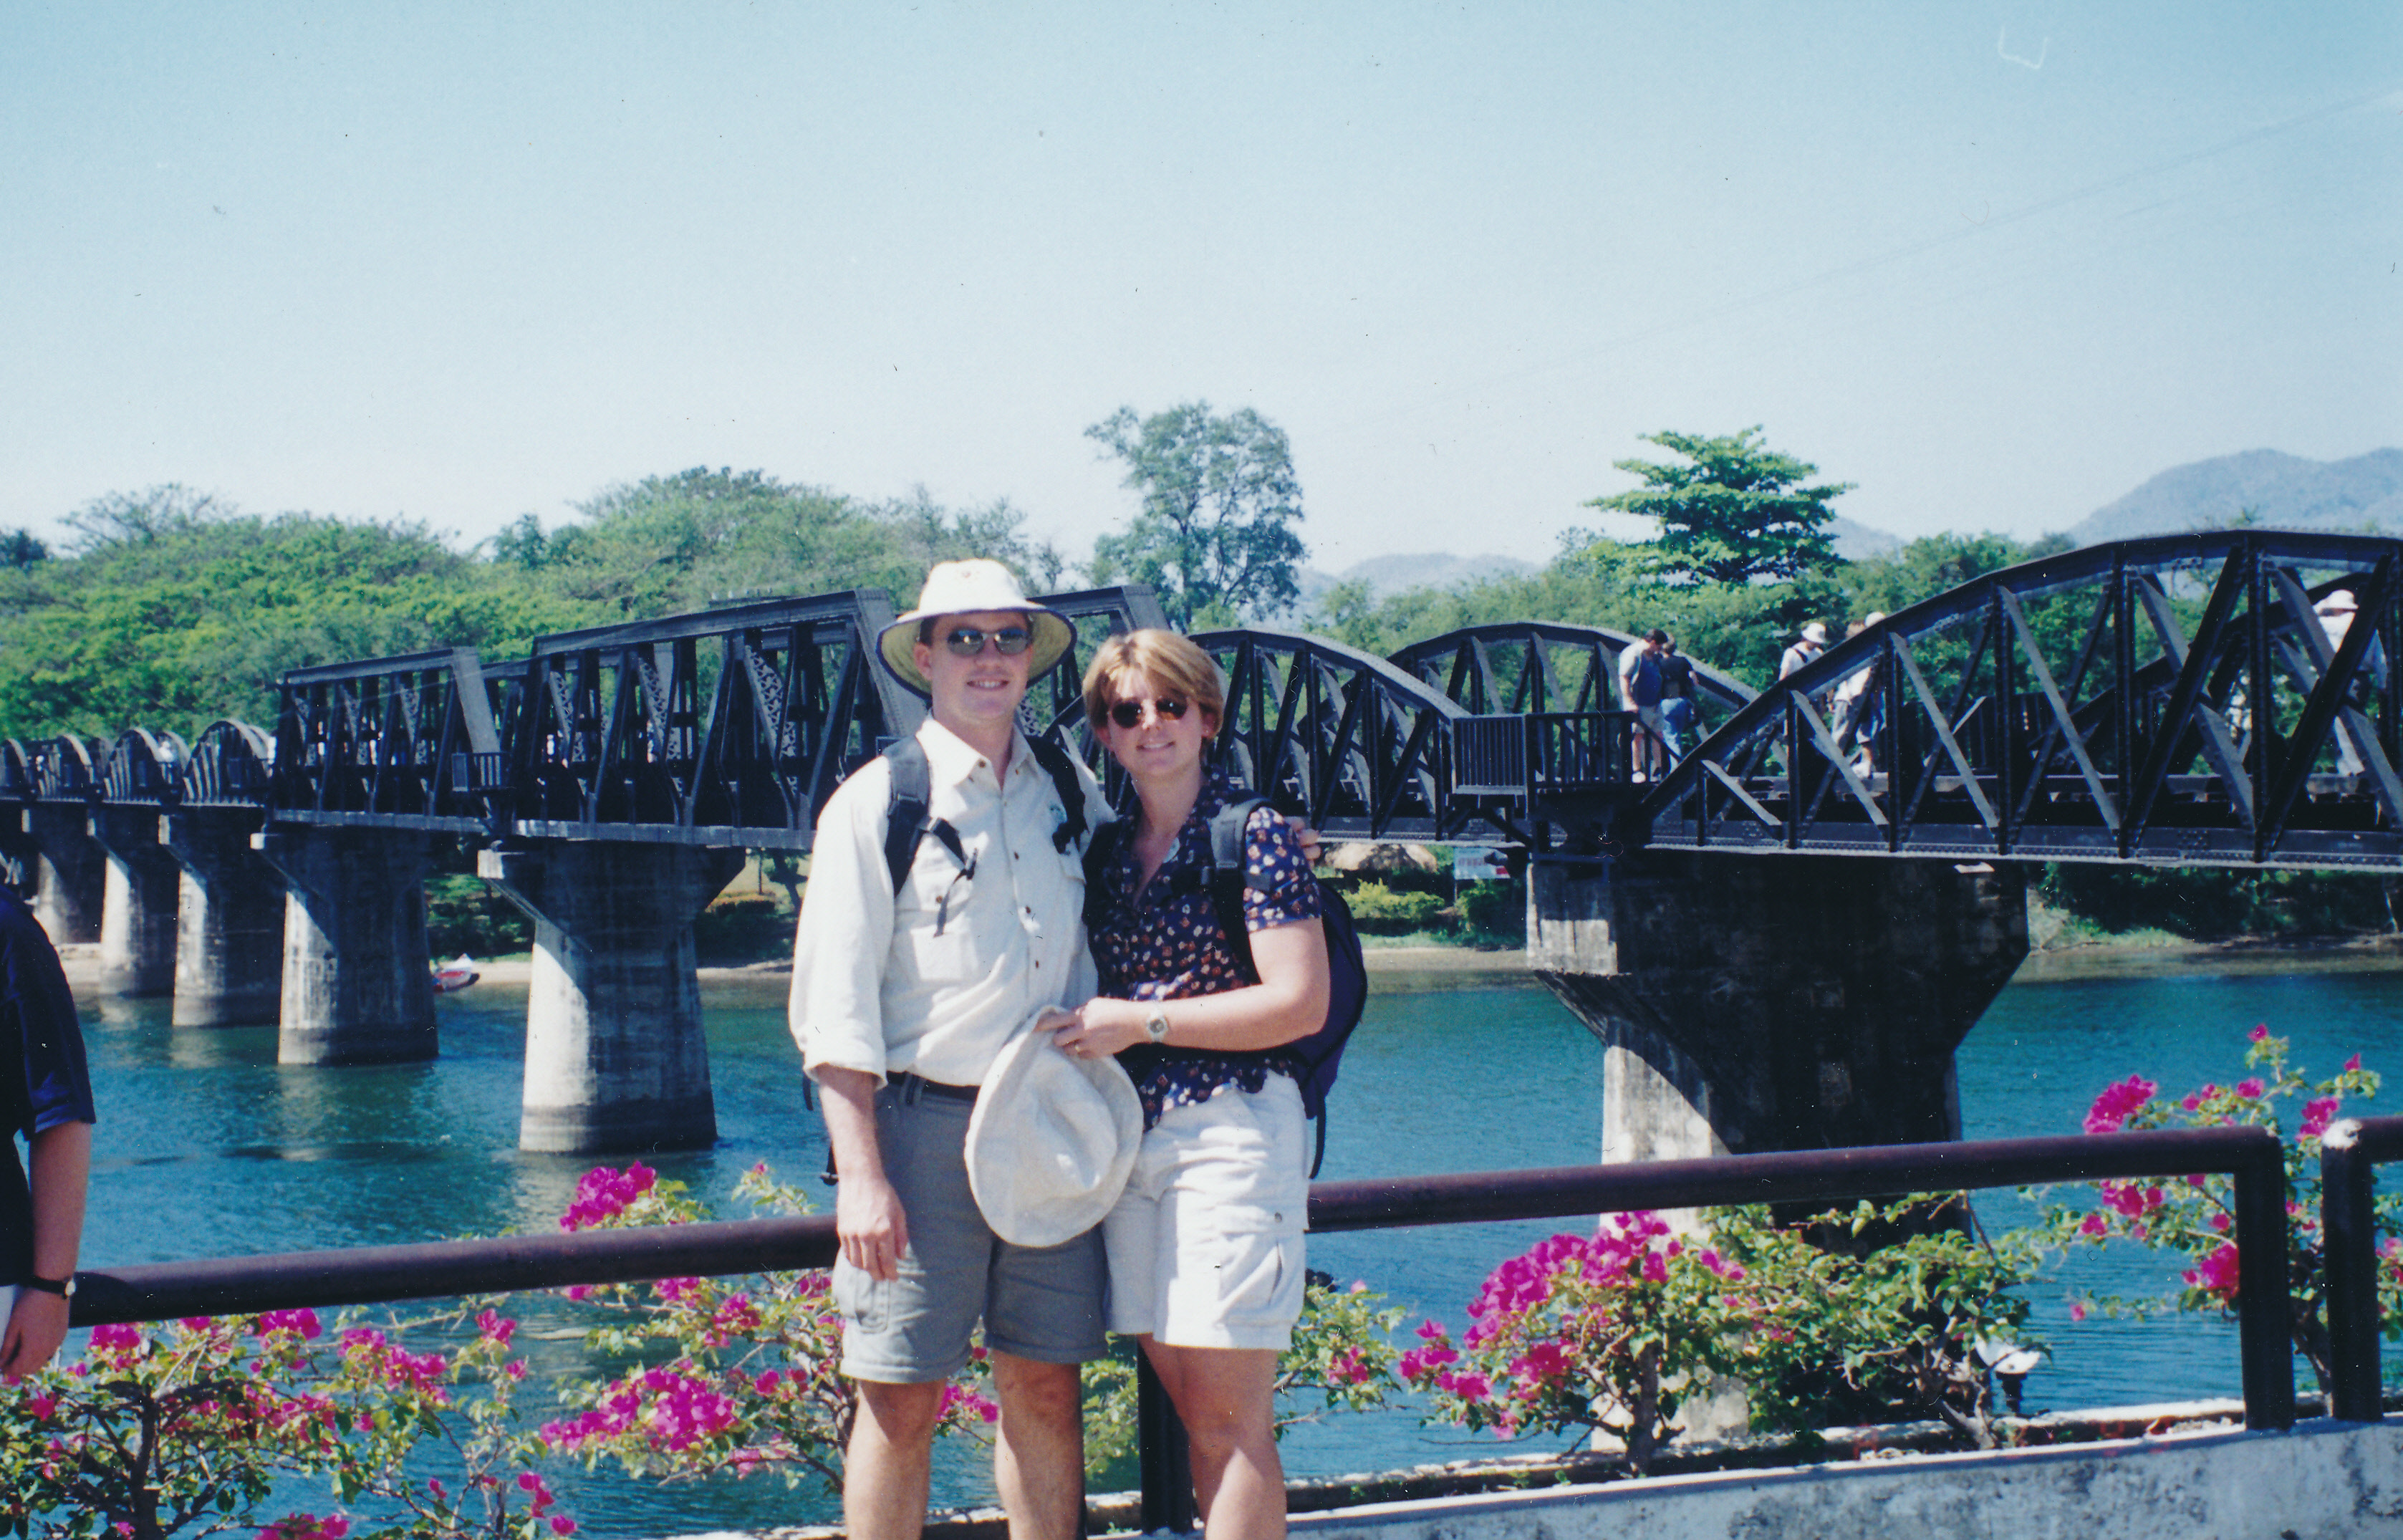 Bridge over the River Kwai